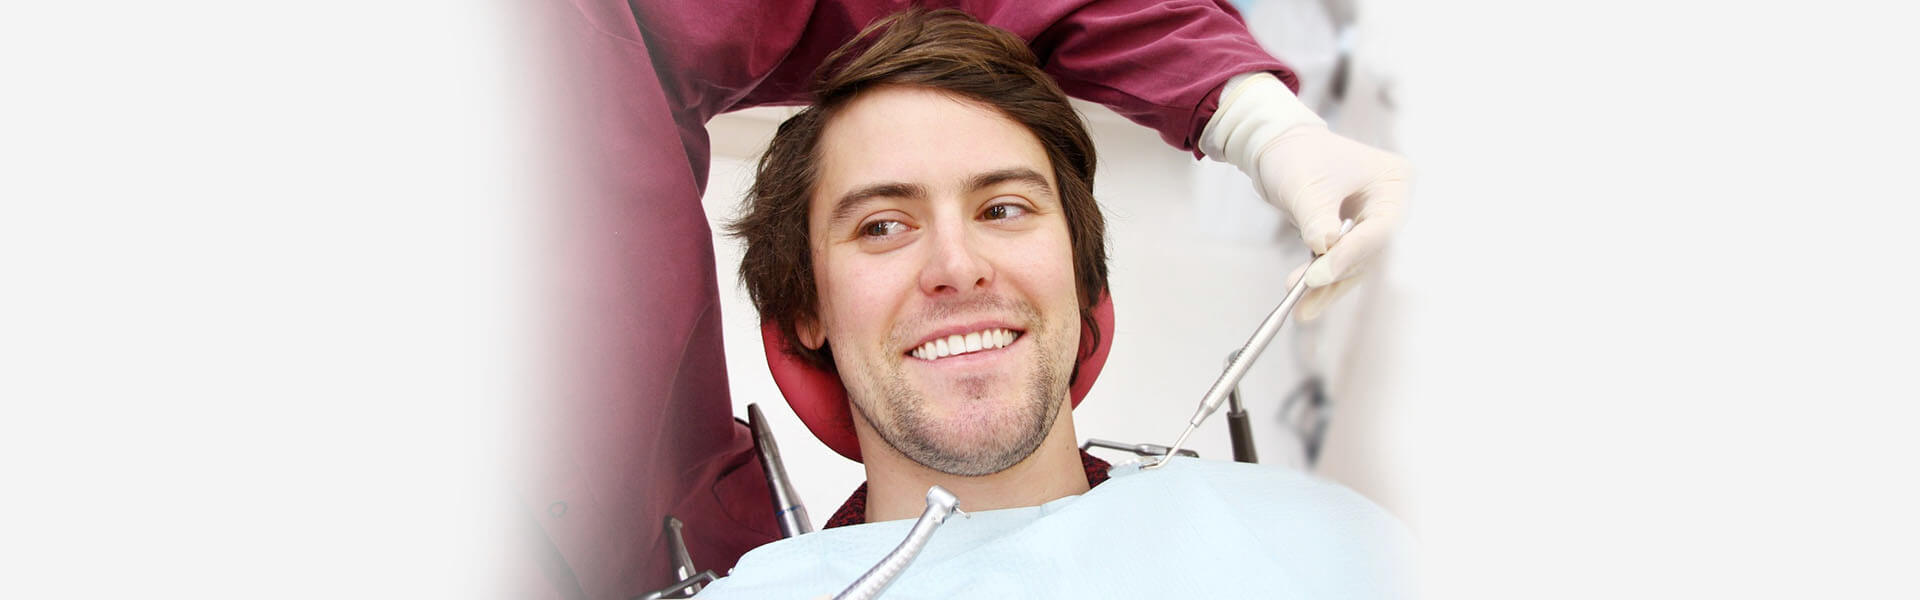 woden dentist restorative dentistry